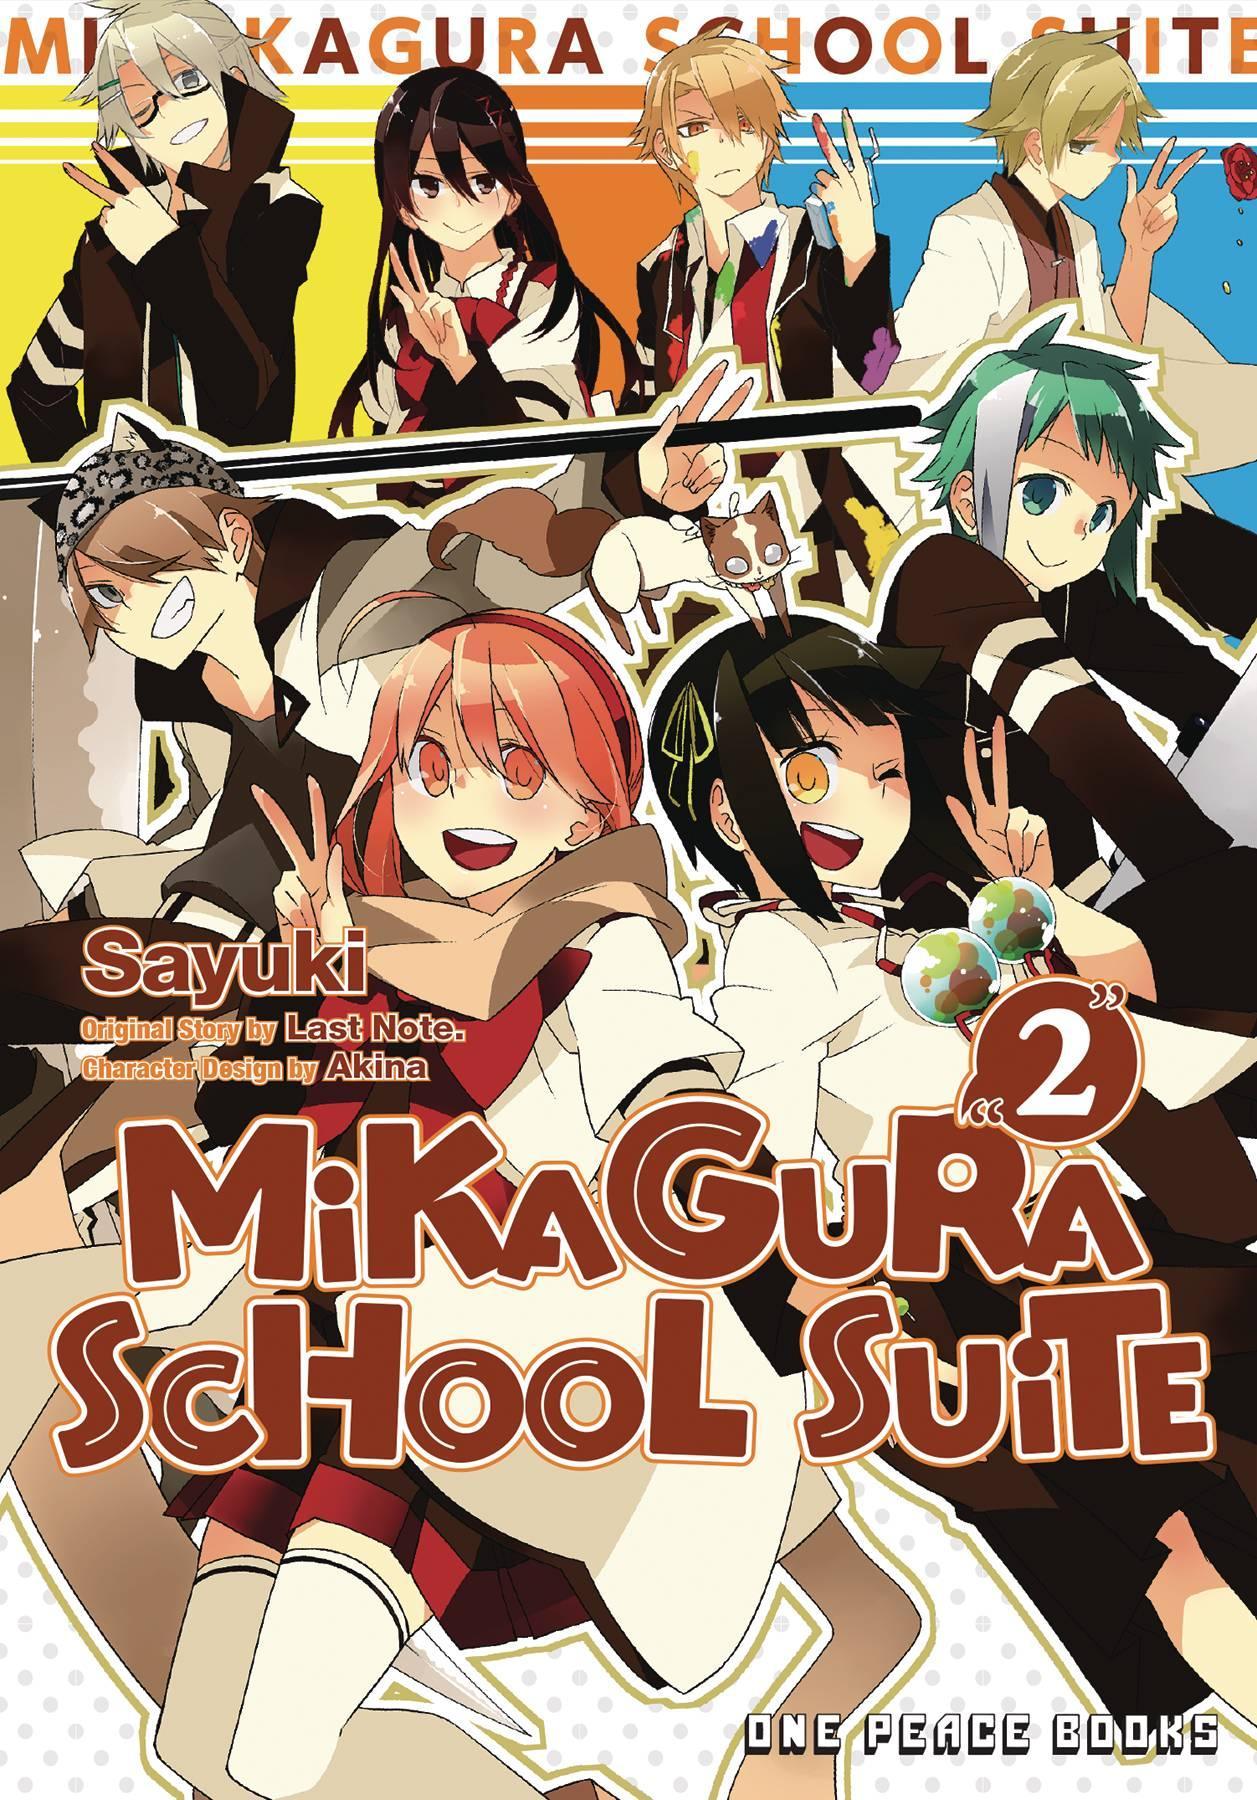 MIKAGURA SCHOOL SUITE GN VOL 02 MANGA - Kings Comics